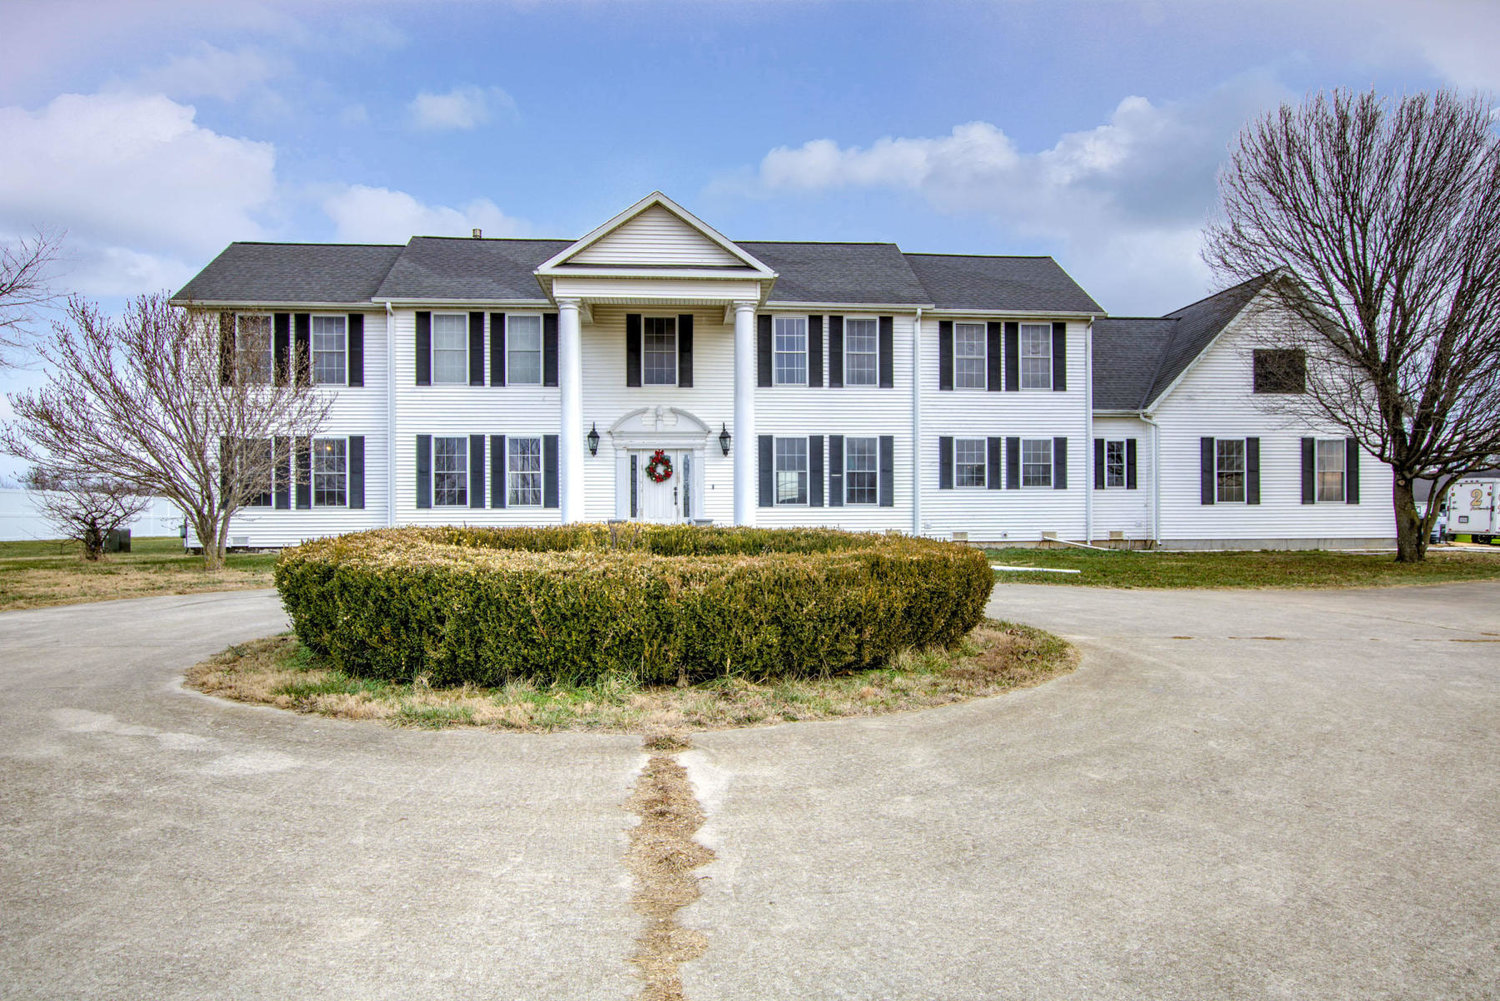 1132 N. Farm Road 185
$800,000
Bedrooms: 4
Bathrooms: 5.5
Listing firm: Keller Williams Greater Springfield